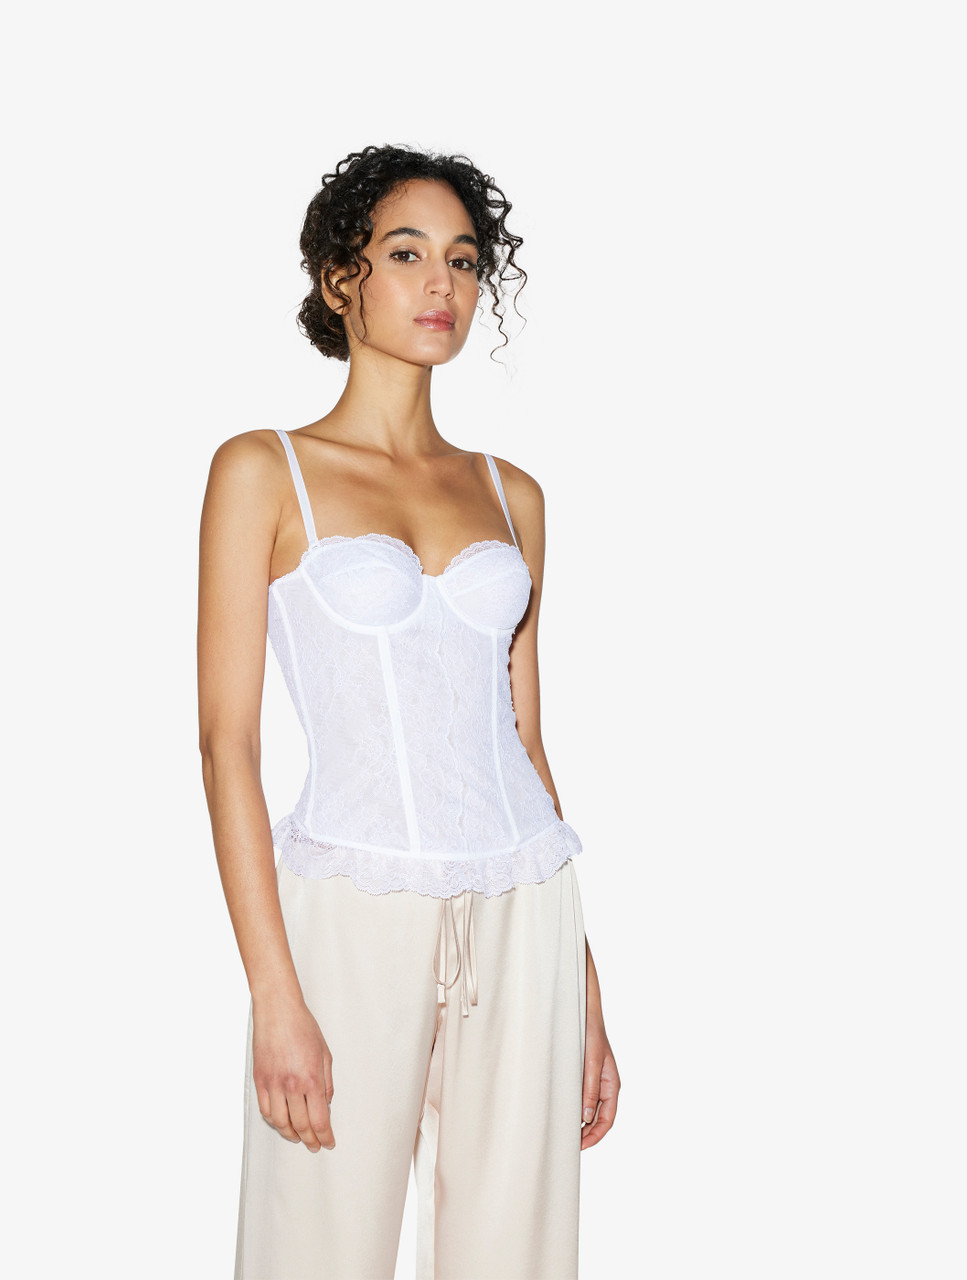 Long lace corset in White - ONLINE EXCLUSIVE - La Perla - Russia